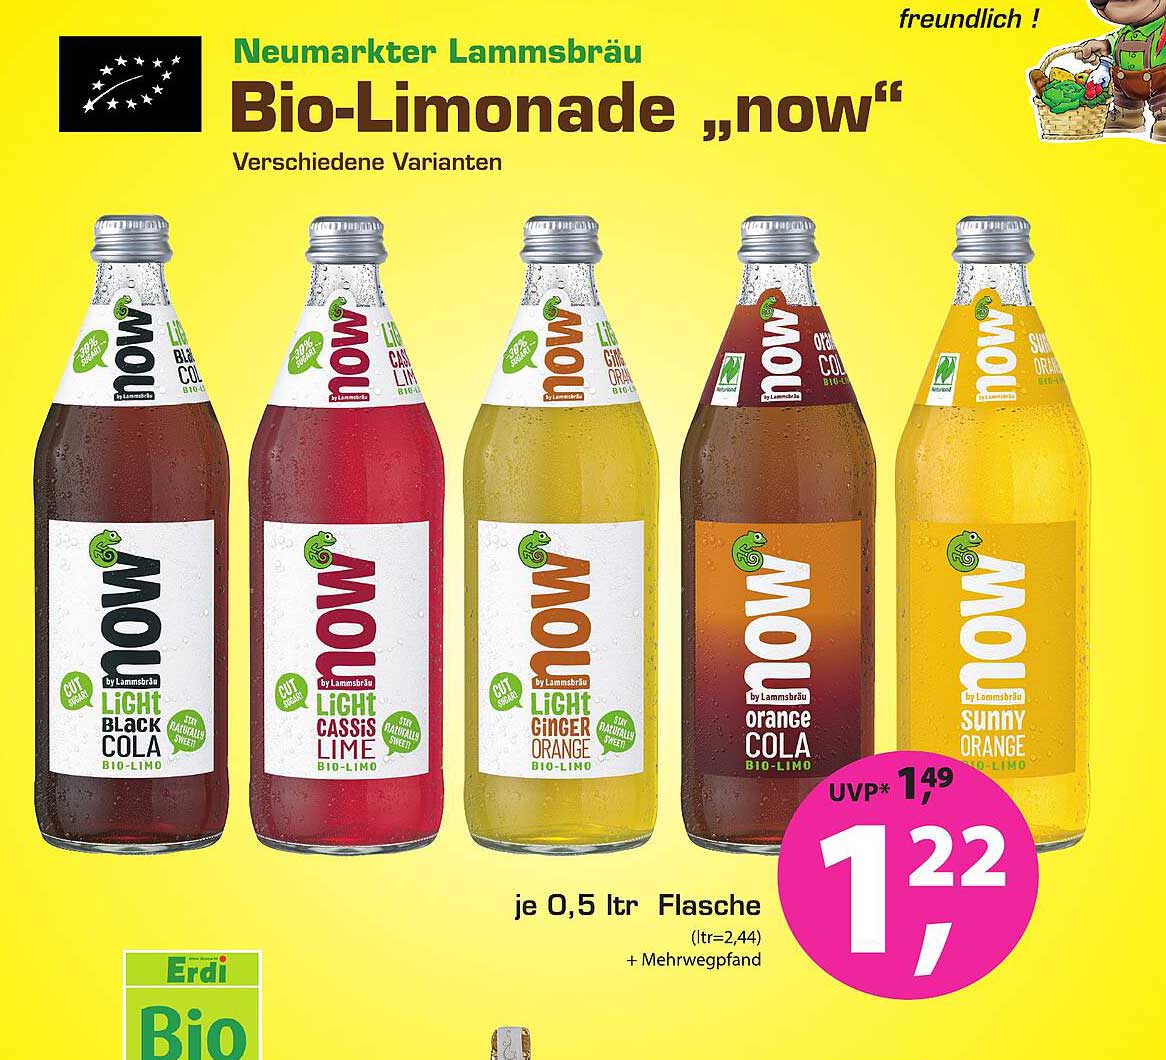 Erdi Biomarkt Bio-limonade „now“